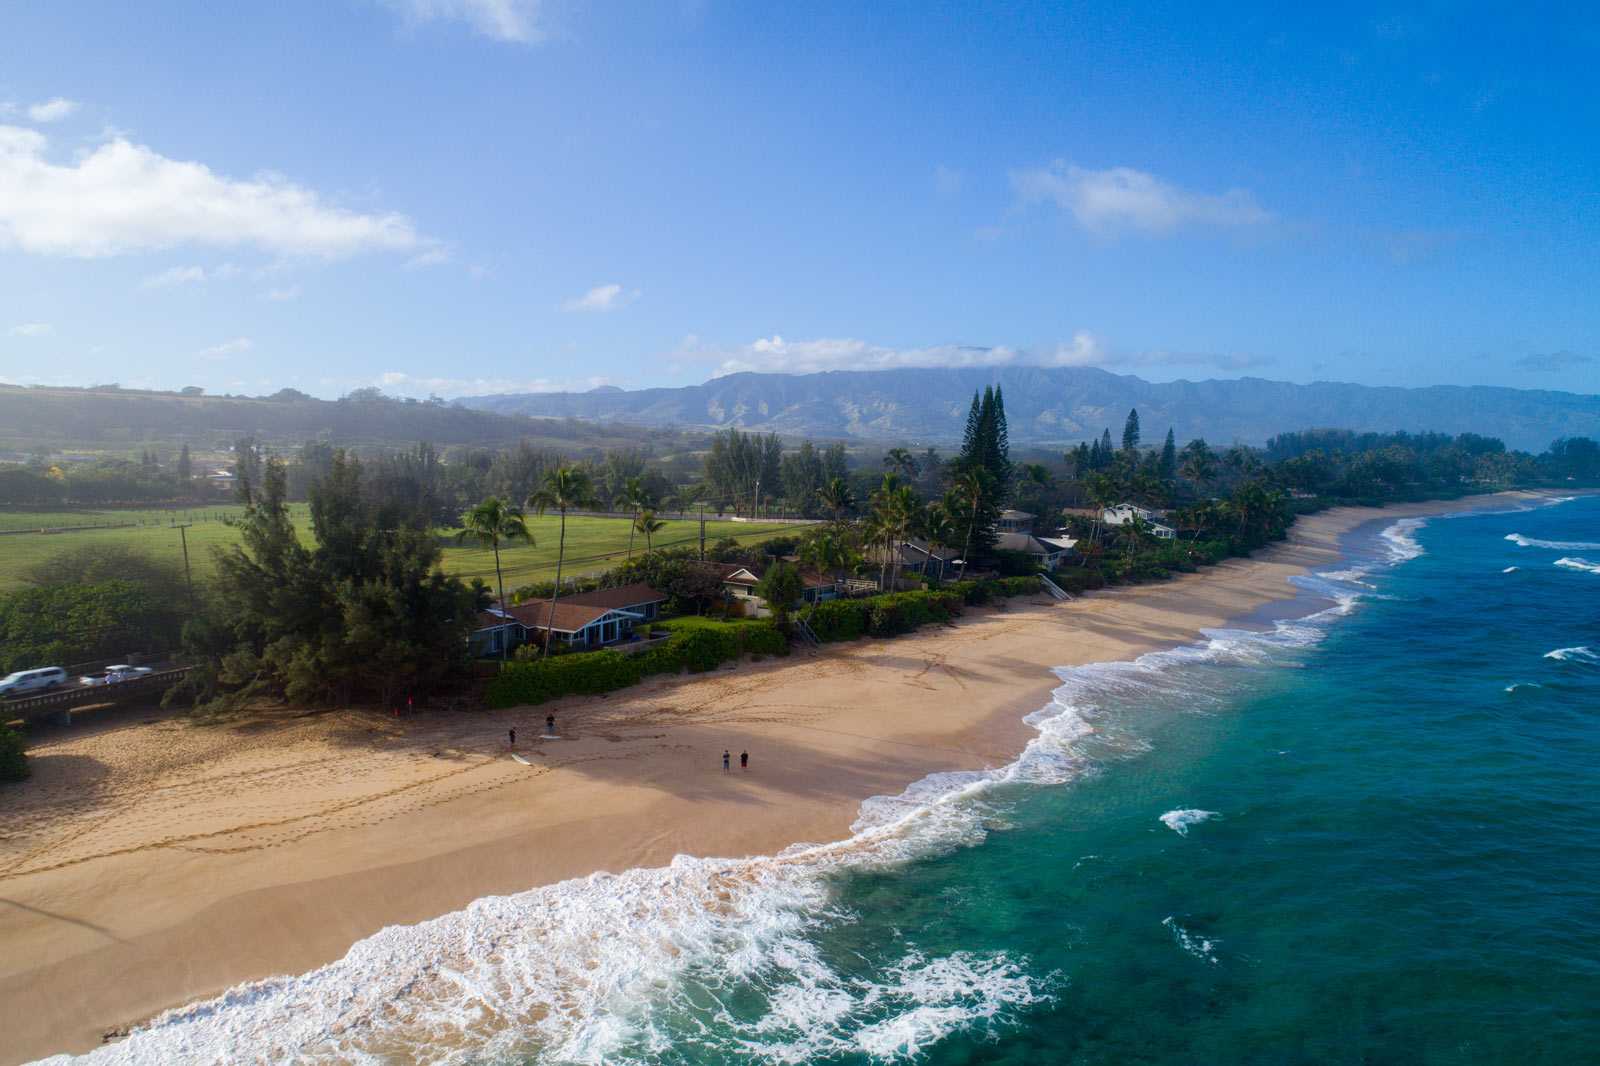 Where to stay in Hawaii Oahu